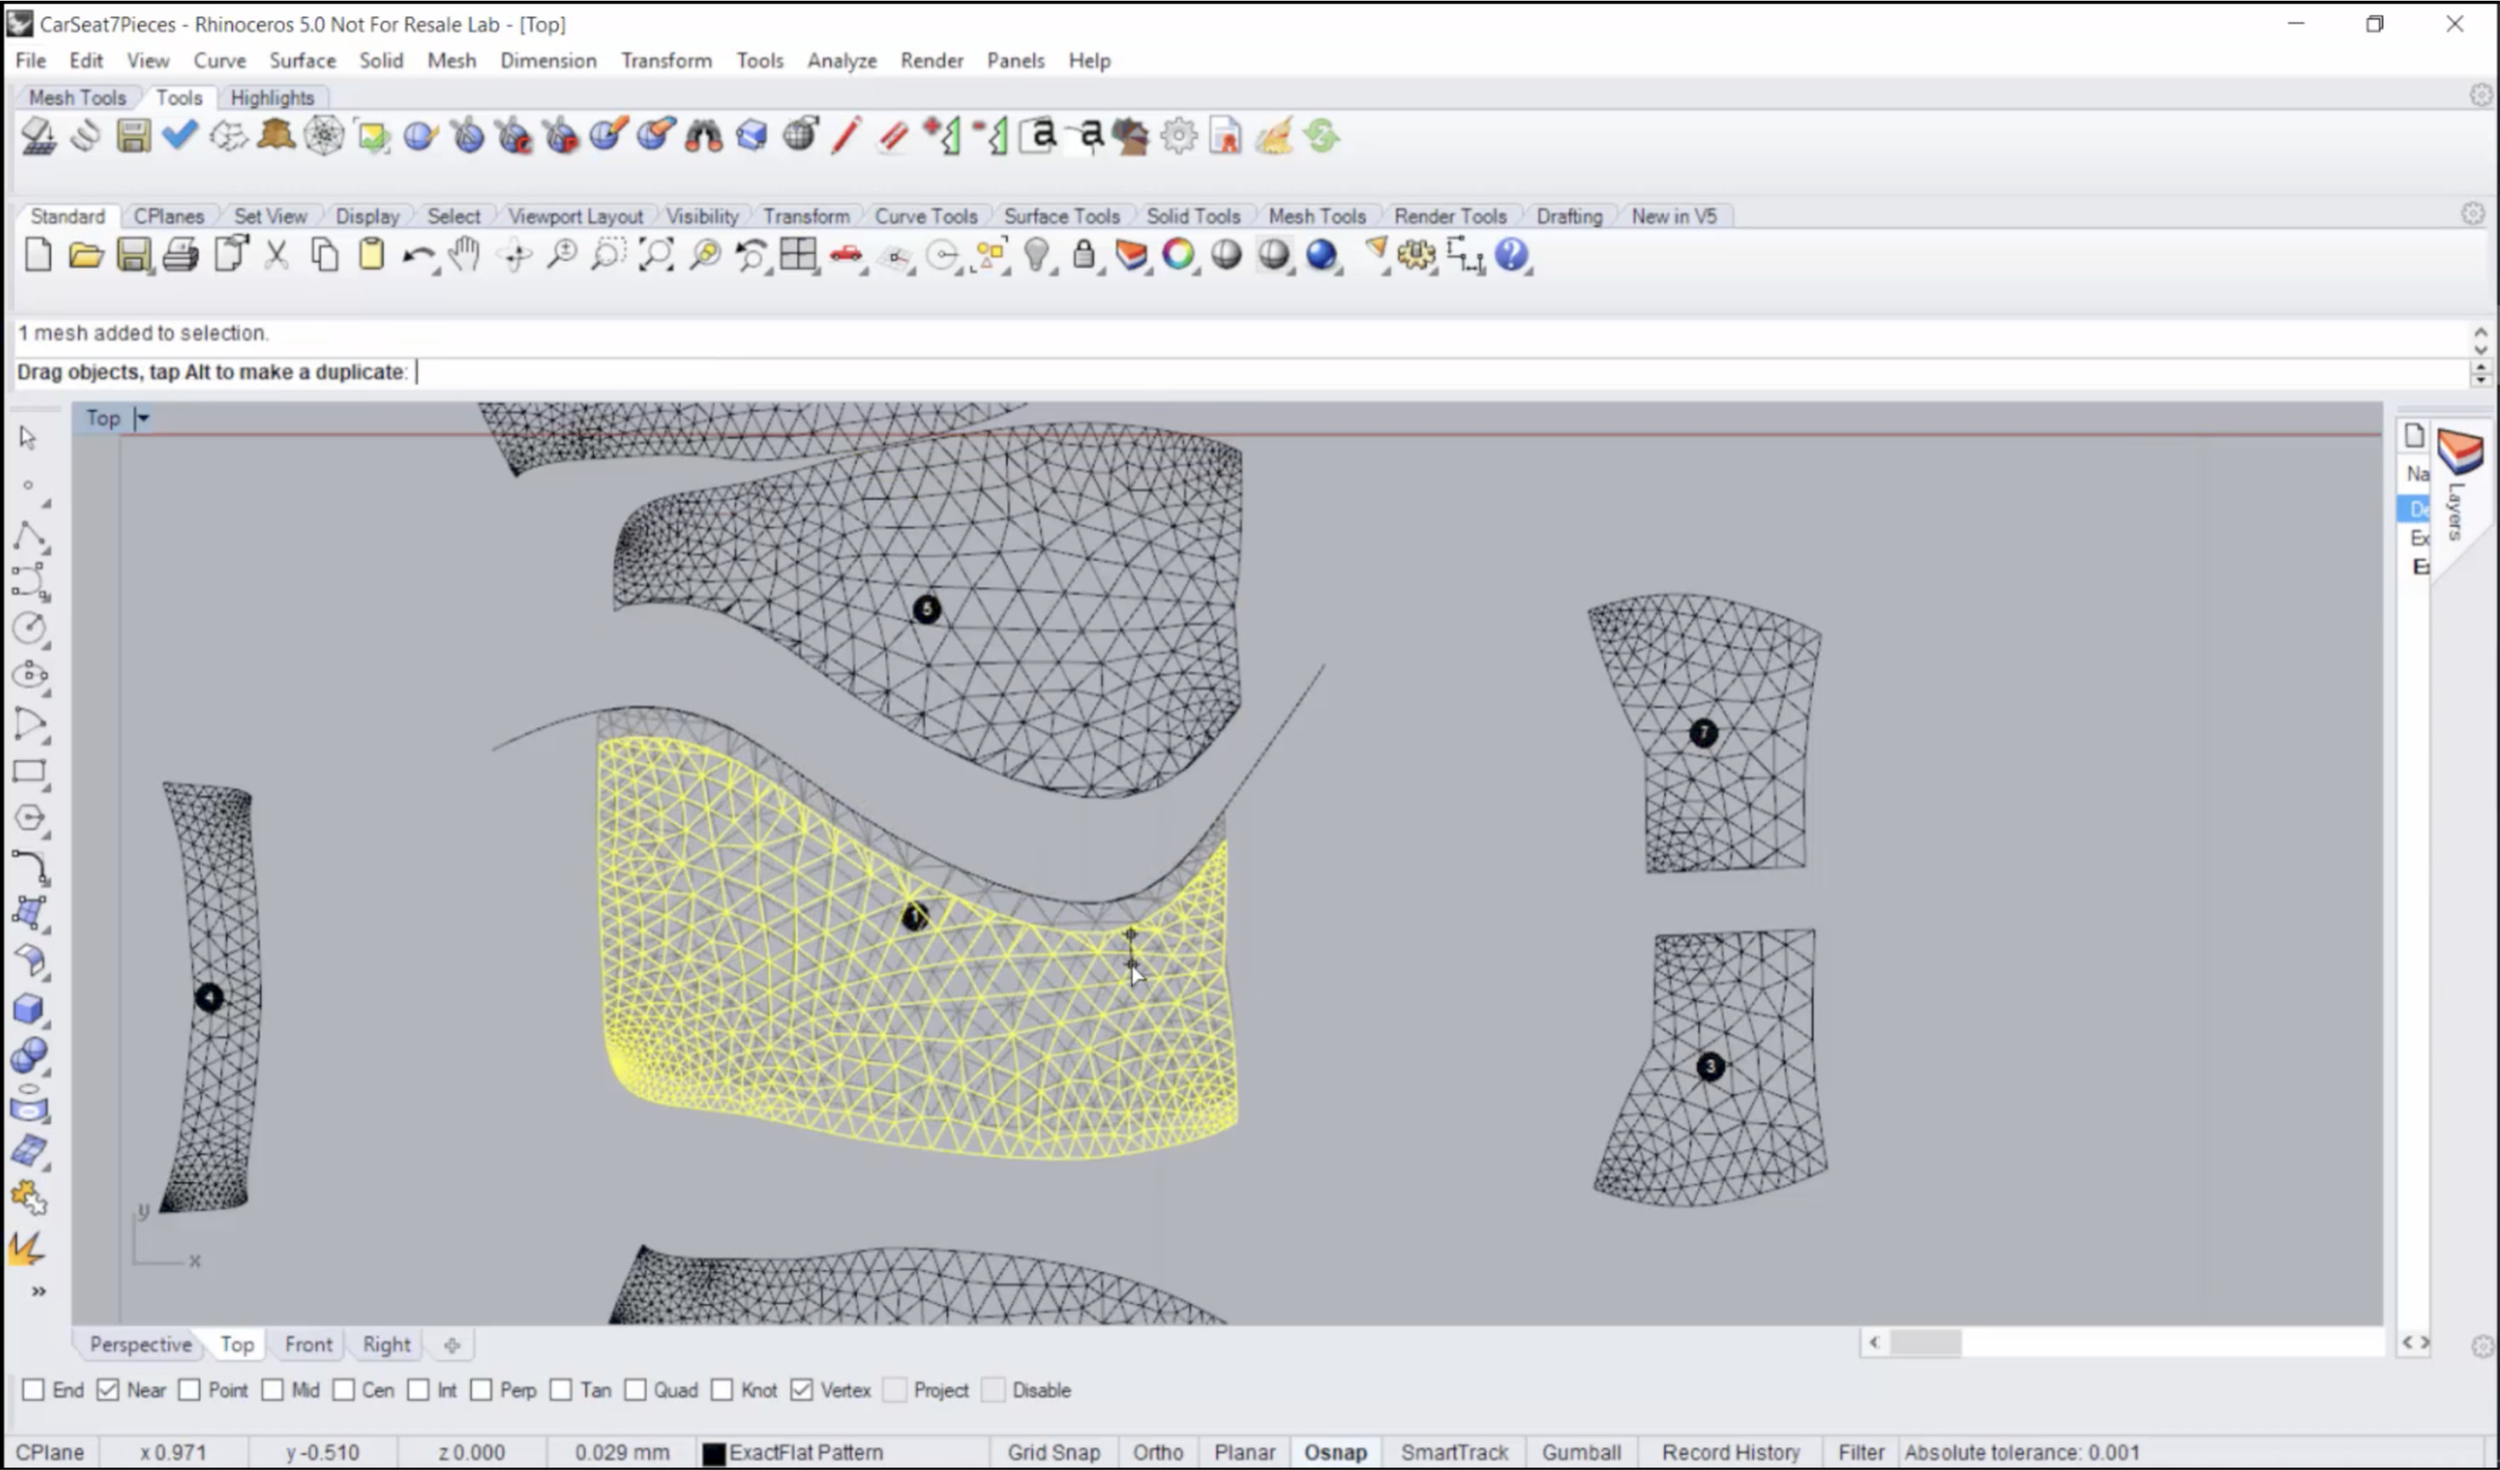 ExactFlat 3D to 2D digital patterning software: The Cut Tool